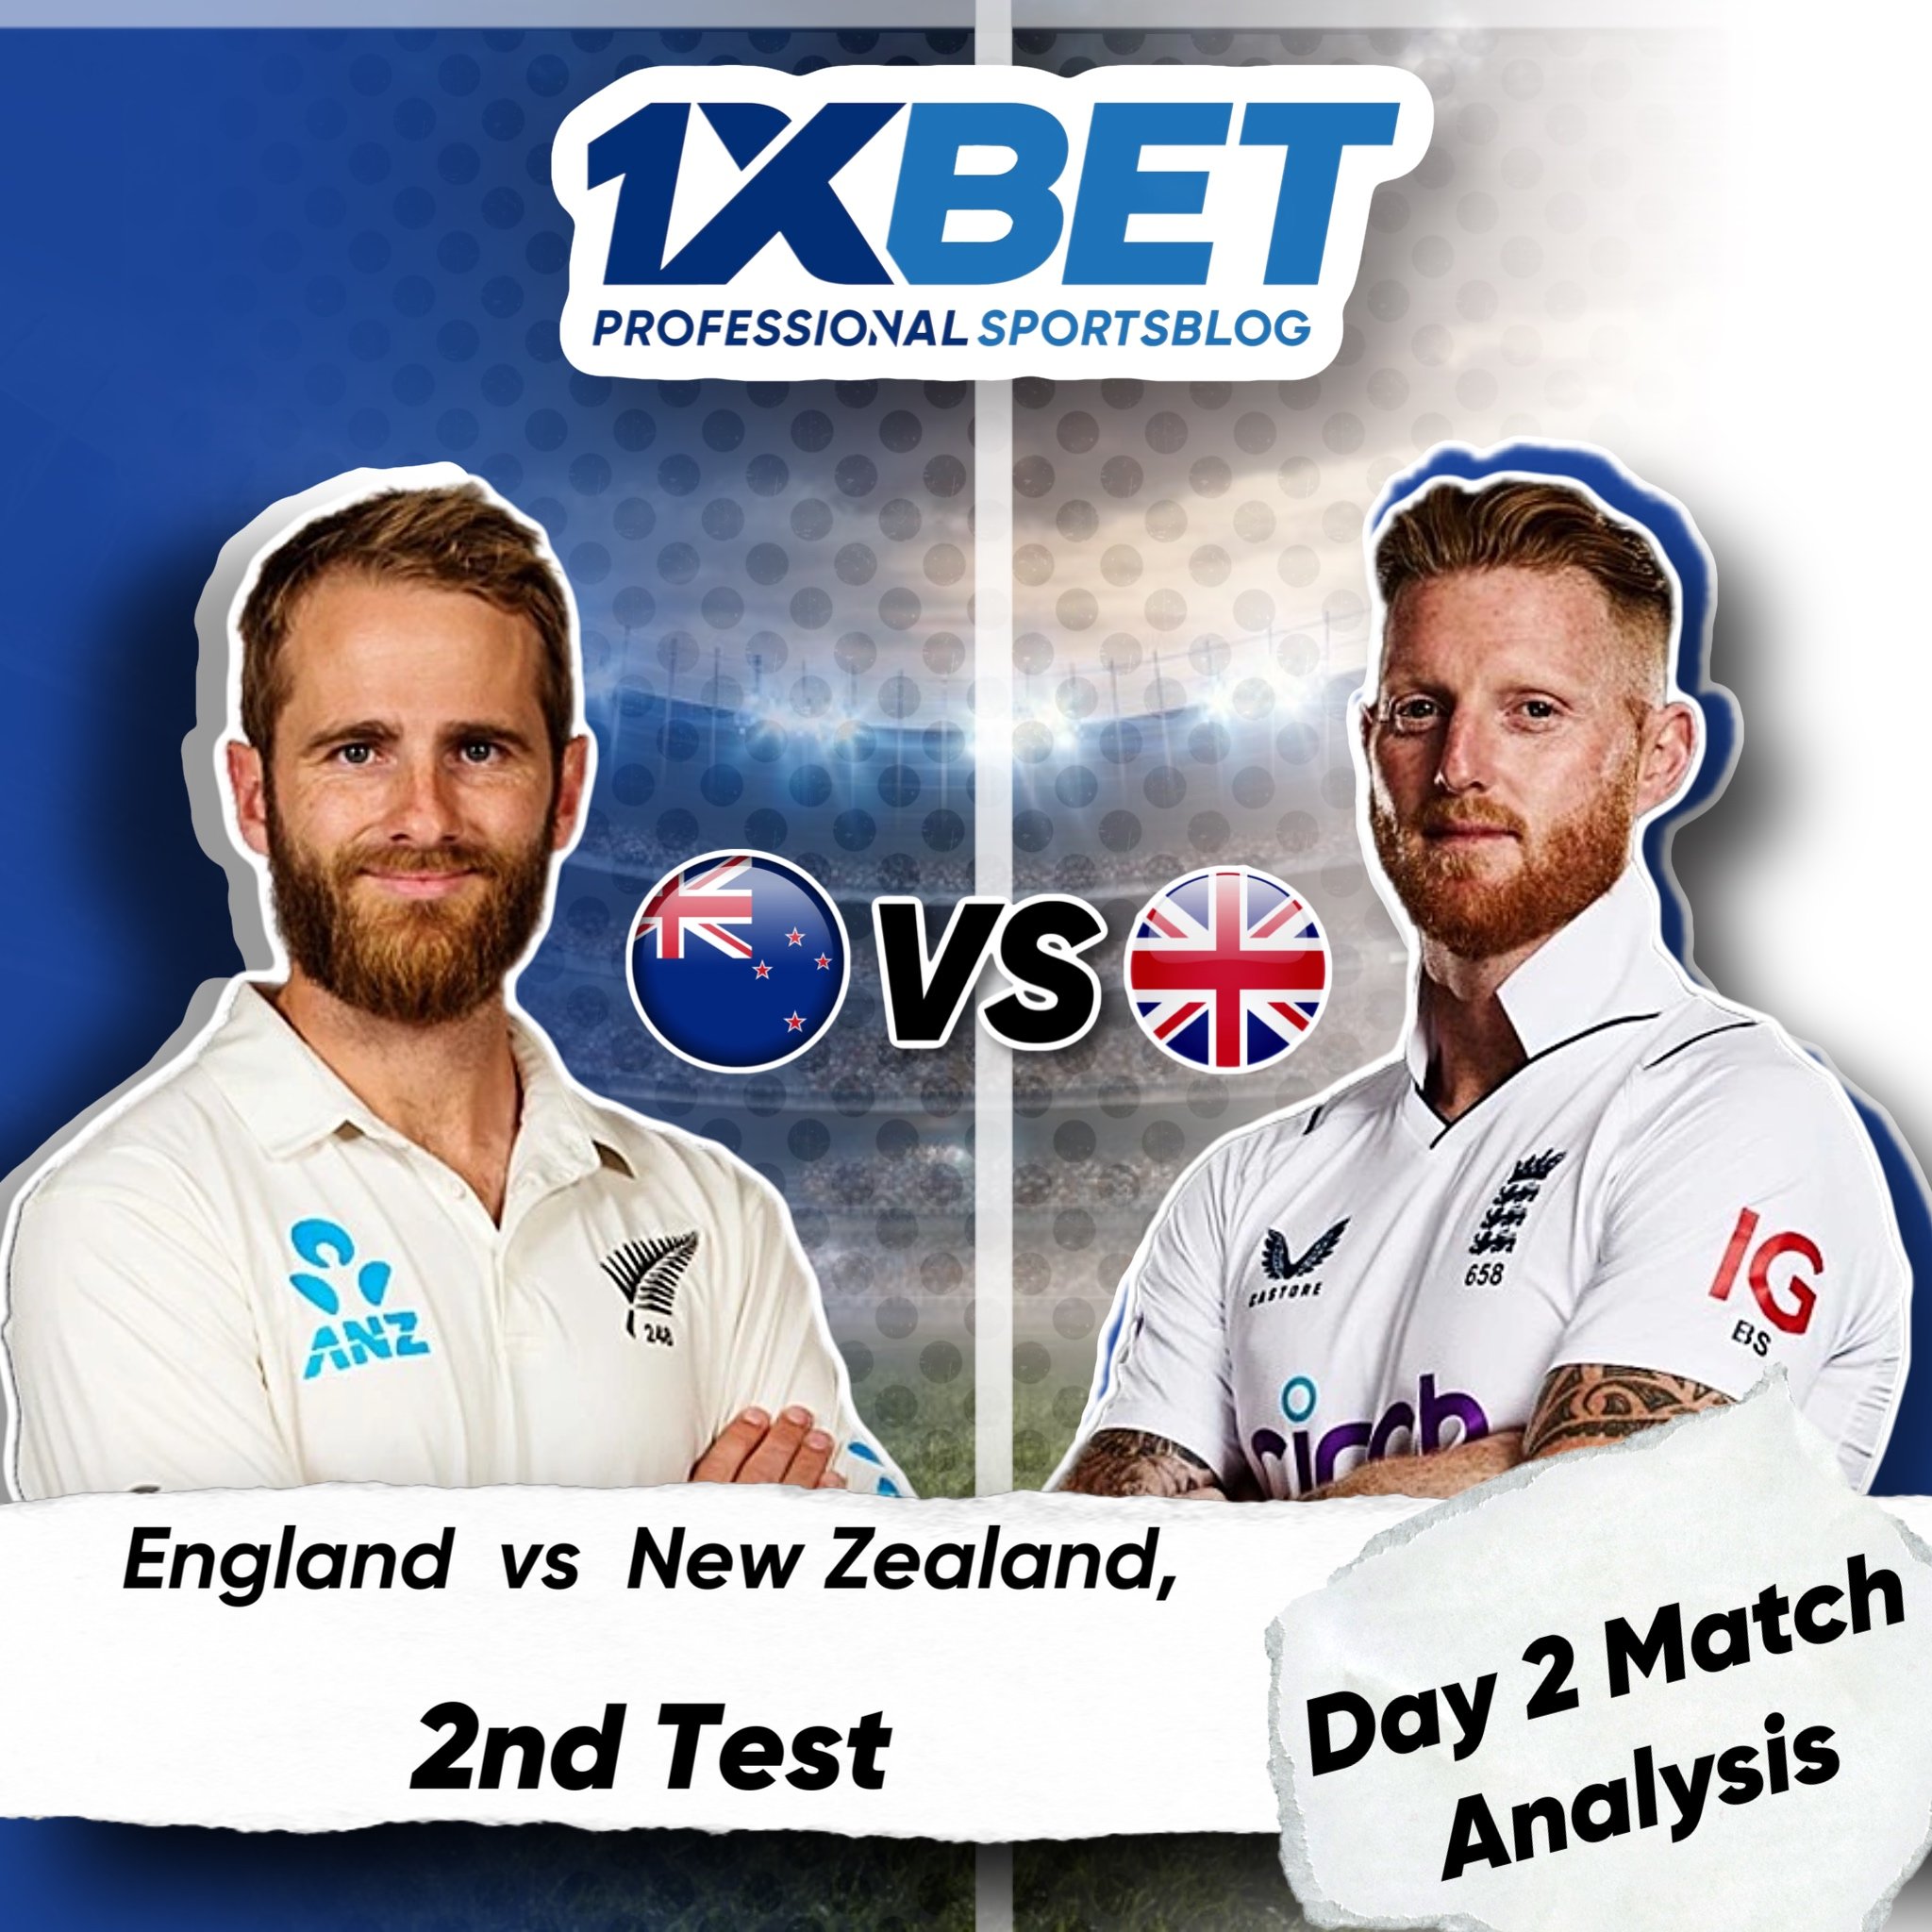 England vs New Zealand, 2nd Test, Day 2 Match Analysis